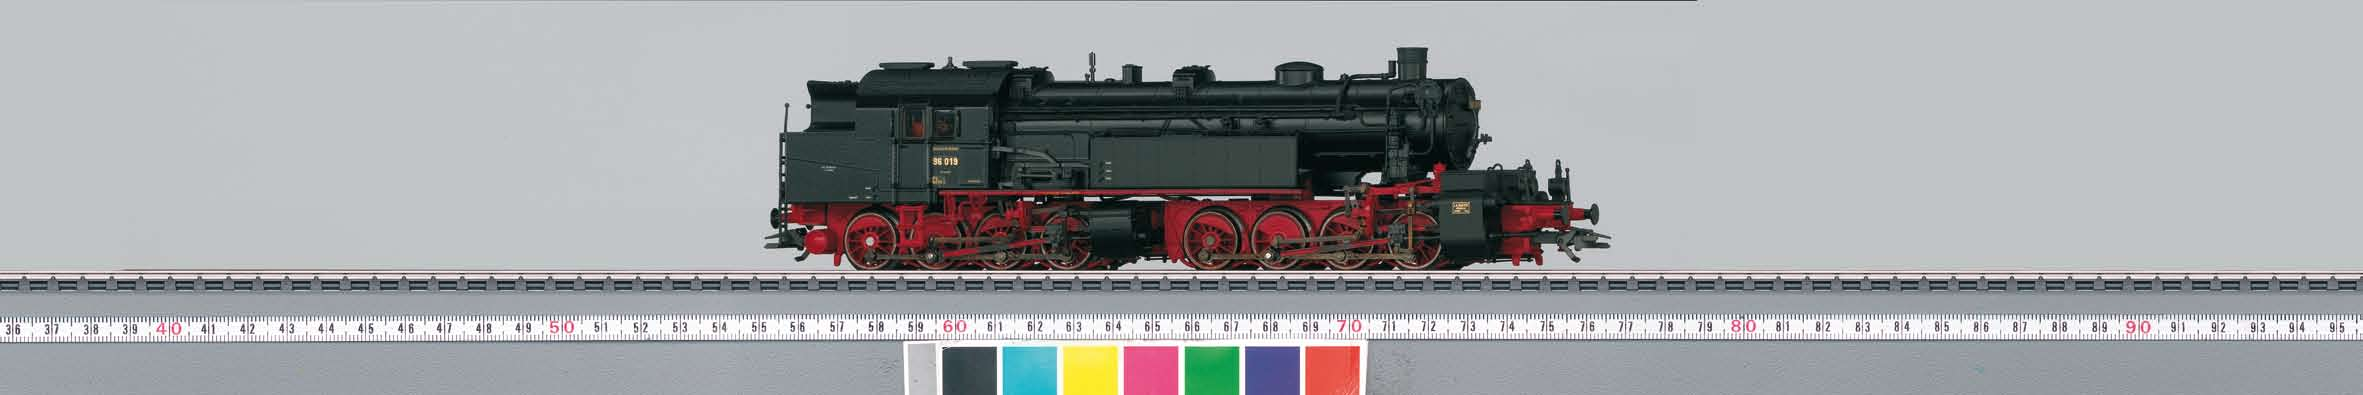 Stoomlocomotief serie 96 (ceheu2 37968 Zware goederentrein-tenderlocomotief. Voorbeeld: Zware goederentreinlocomotief serie 96 van de Deutsche Reichsbahn-Gesellschaft (DRG).